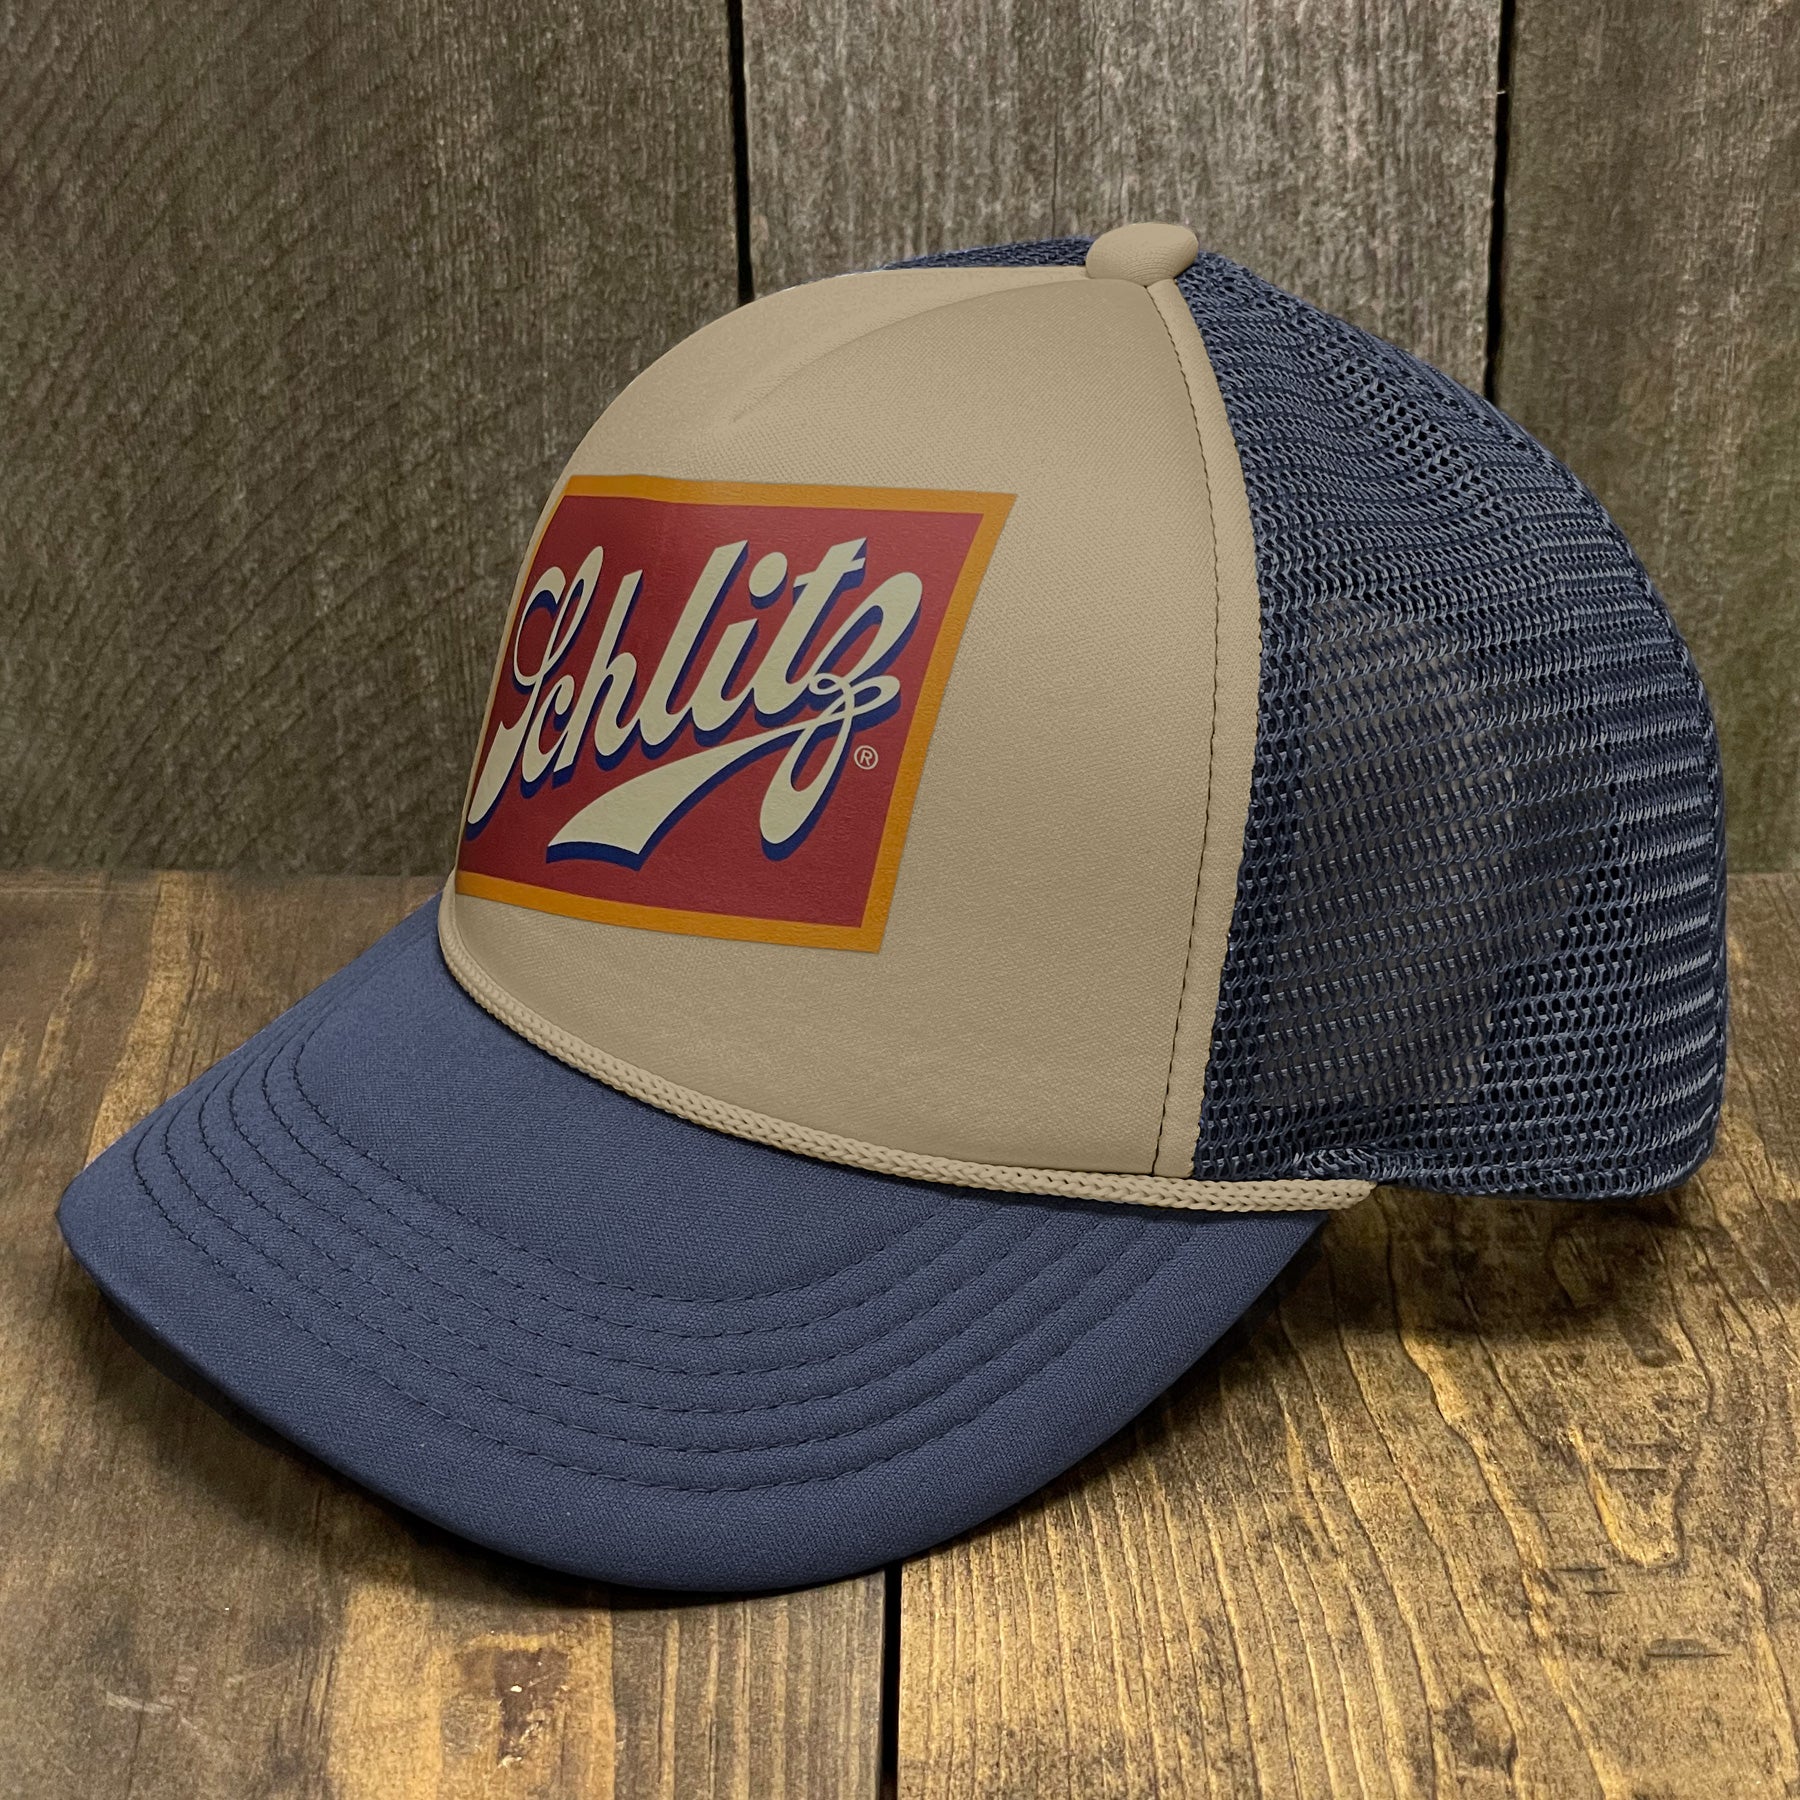 Schlitz Hat - Foam Trucker Hat - Snapback Hat - Brew City Beer Gear